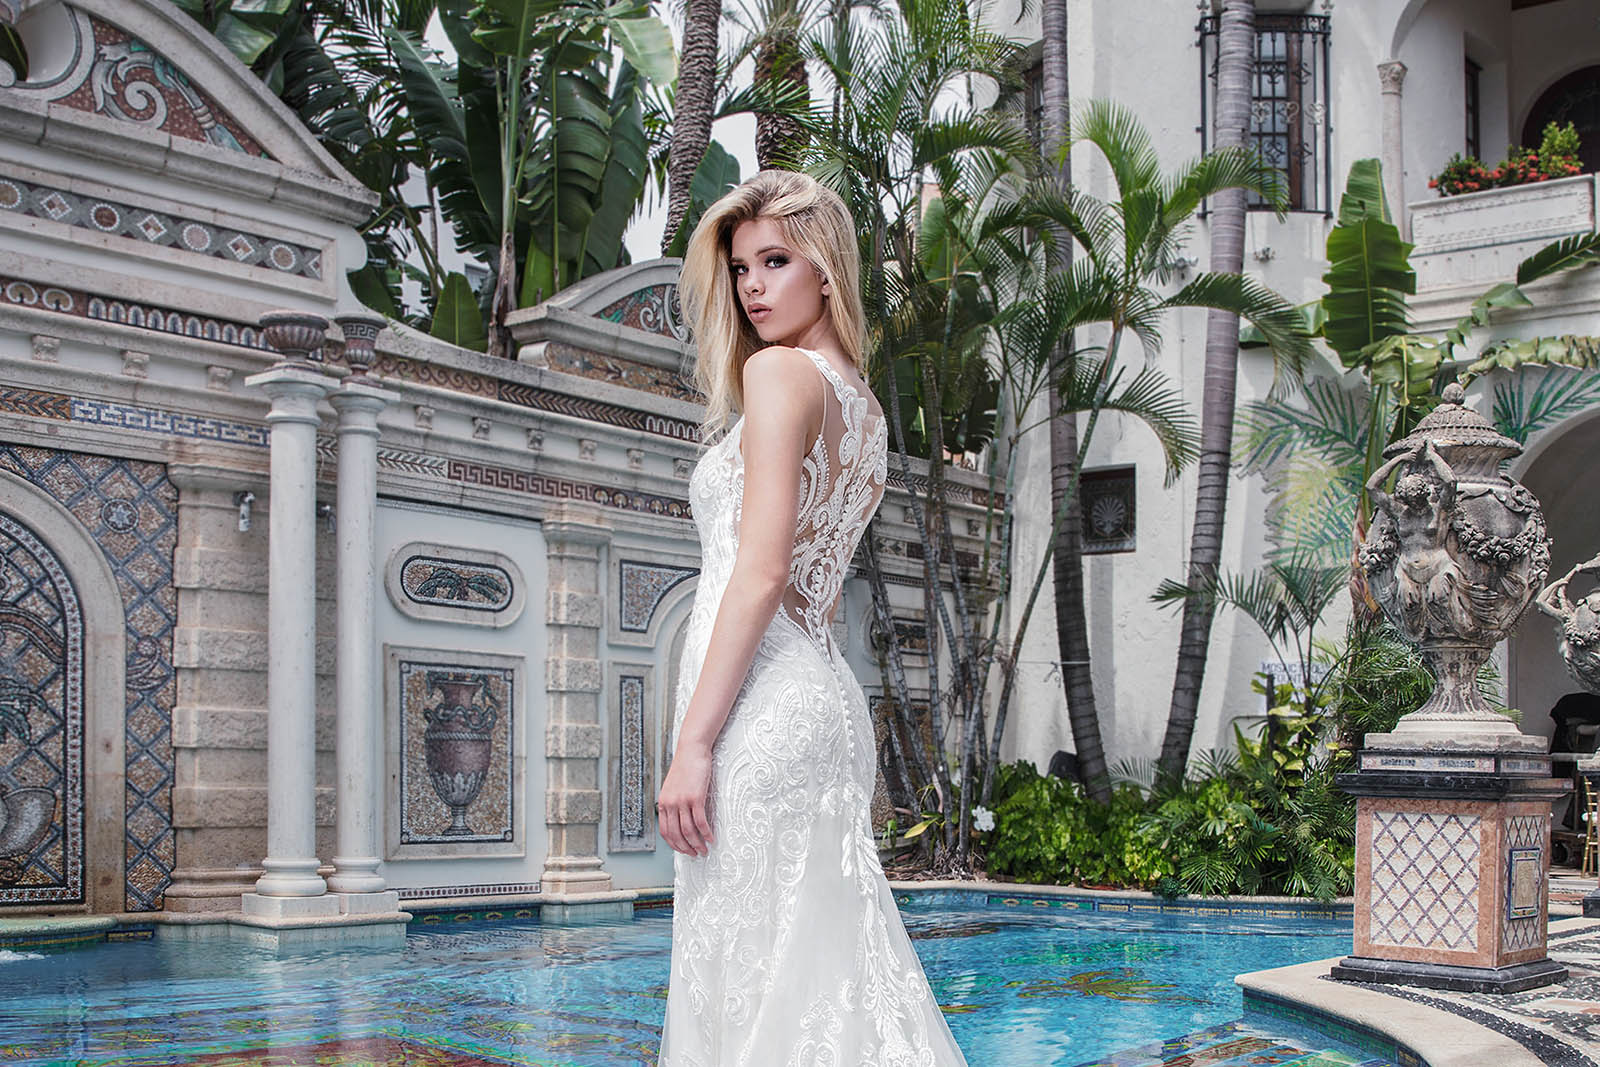 Miami Luxury Wedding Hairstylist - Bridal & Editorial Services - Cassondra Luxury Hair